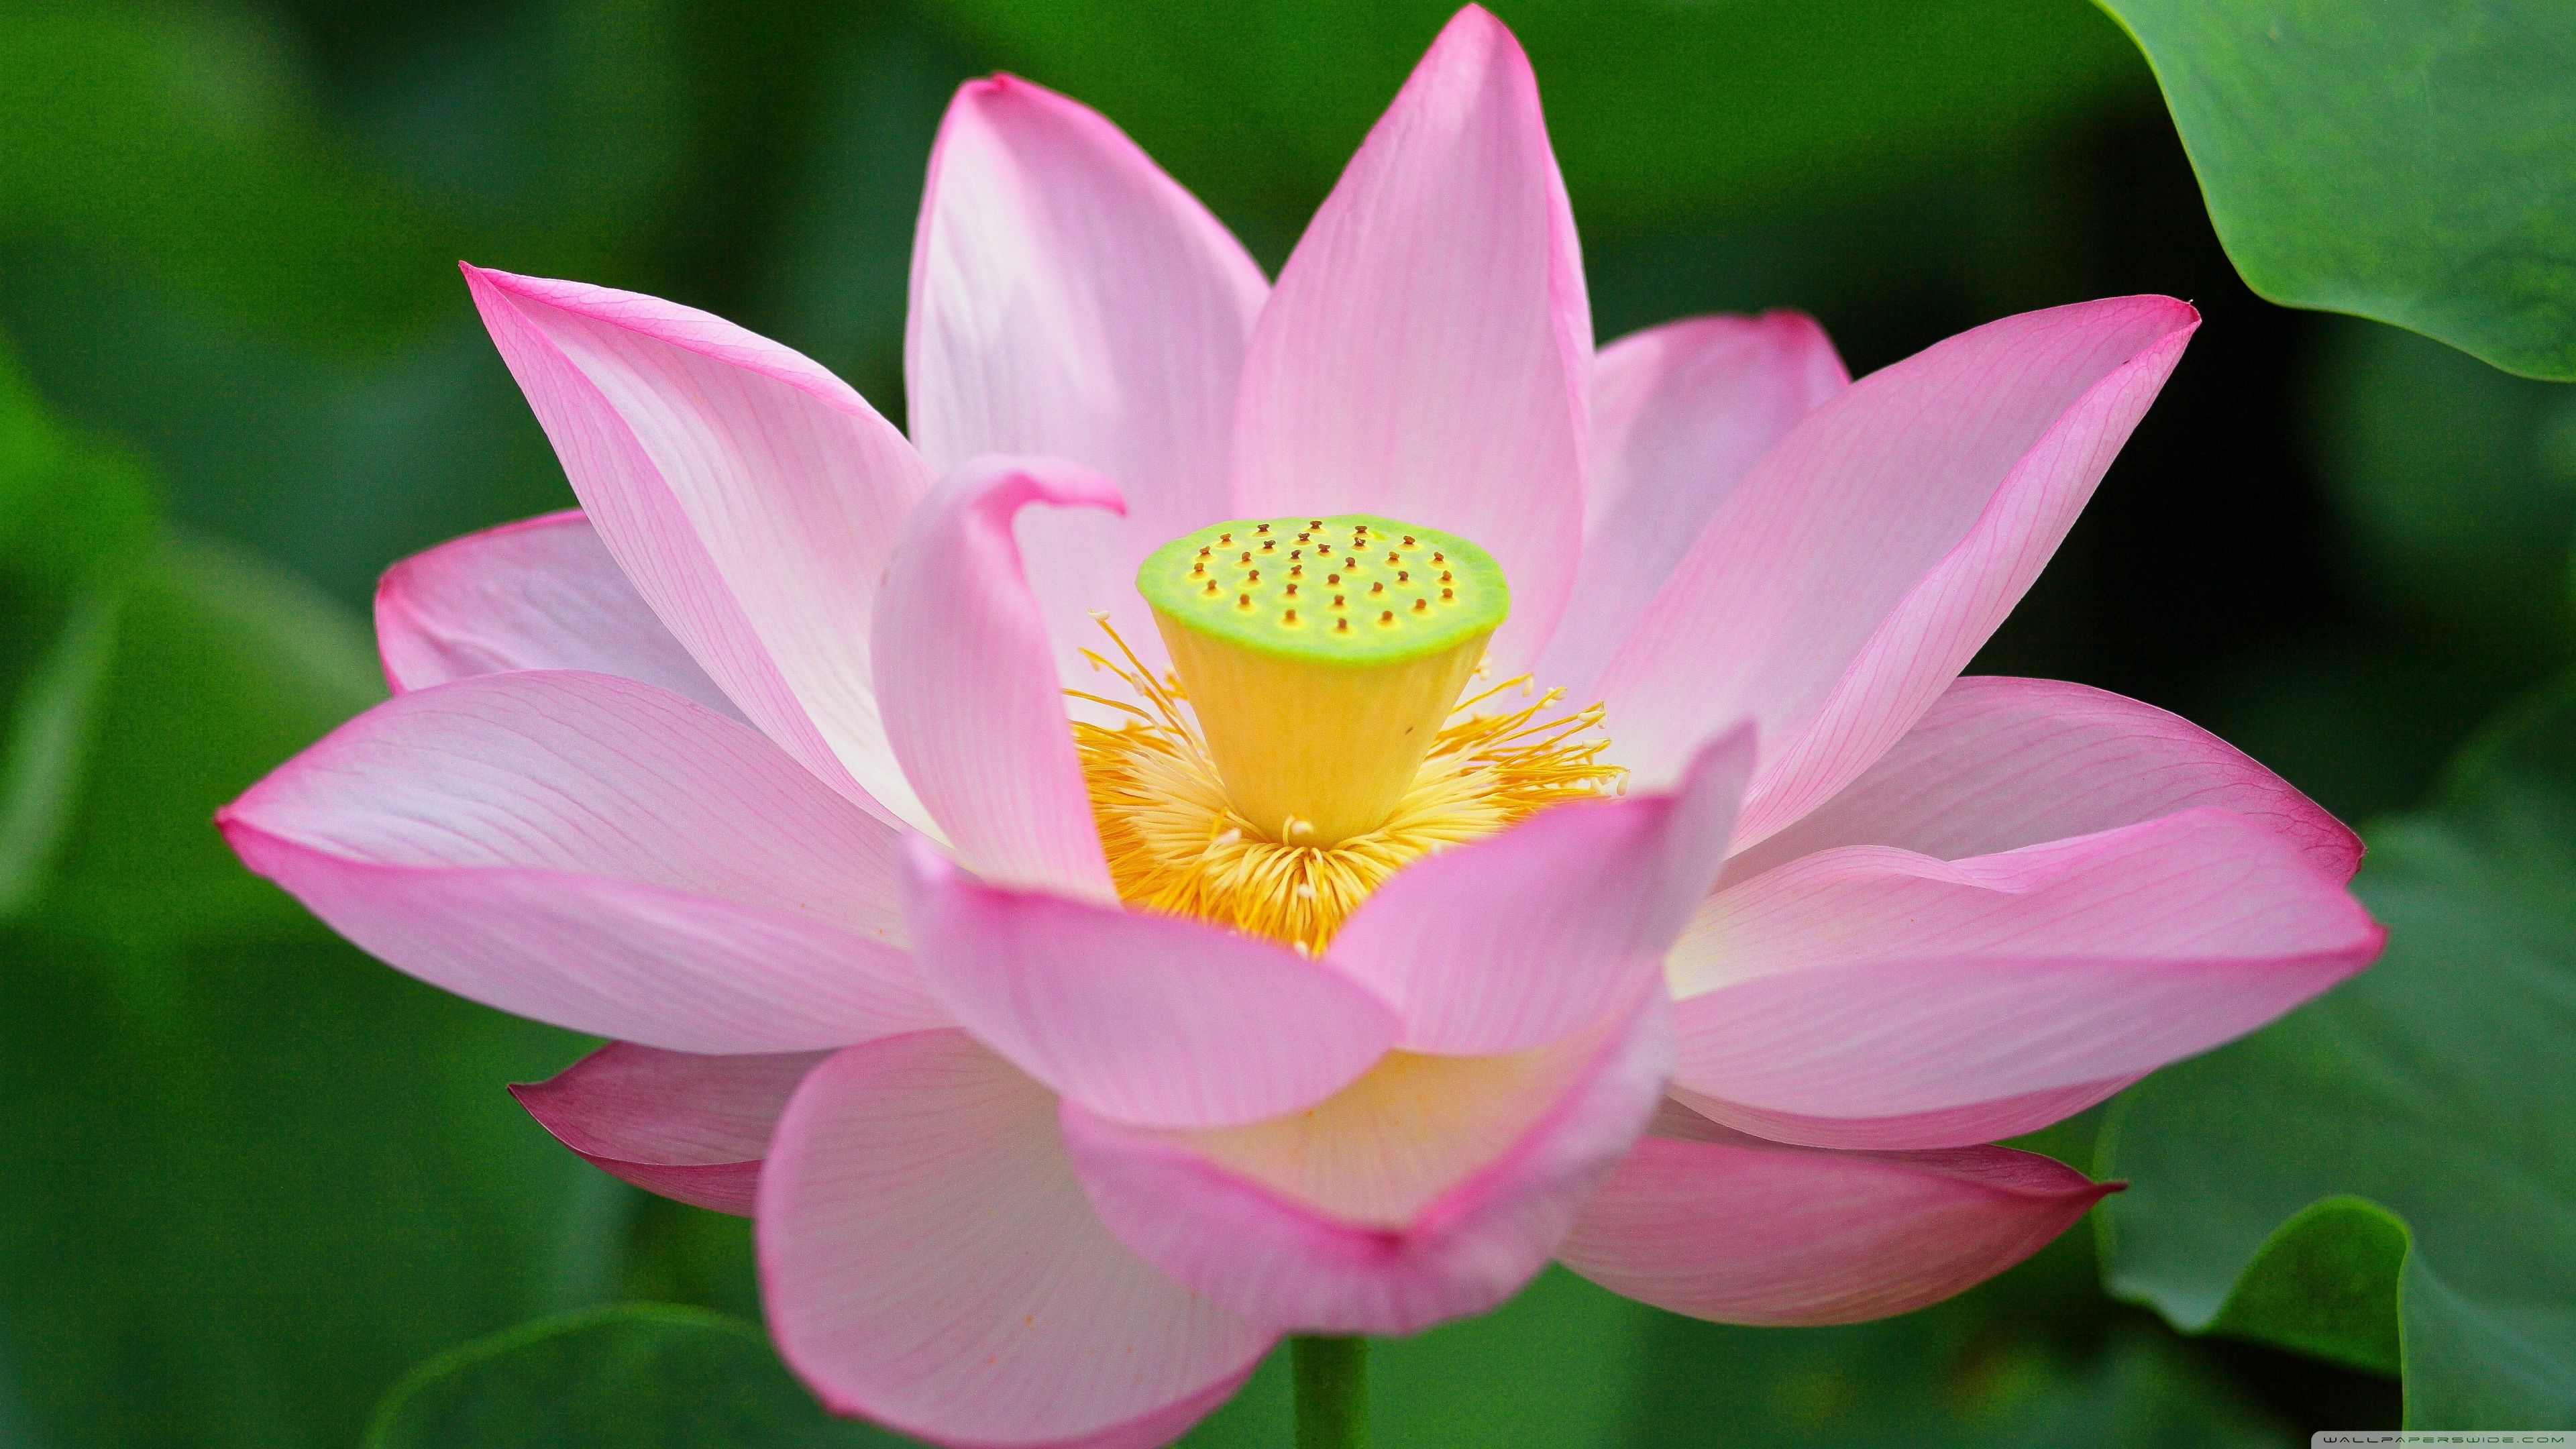 Pink Lotus Flower from Above Ultra HD Desktop Background Wallpaper for 4K UHD TV, Widescreen & UltraWide Desktop & Laptop, Tablet